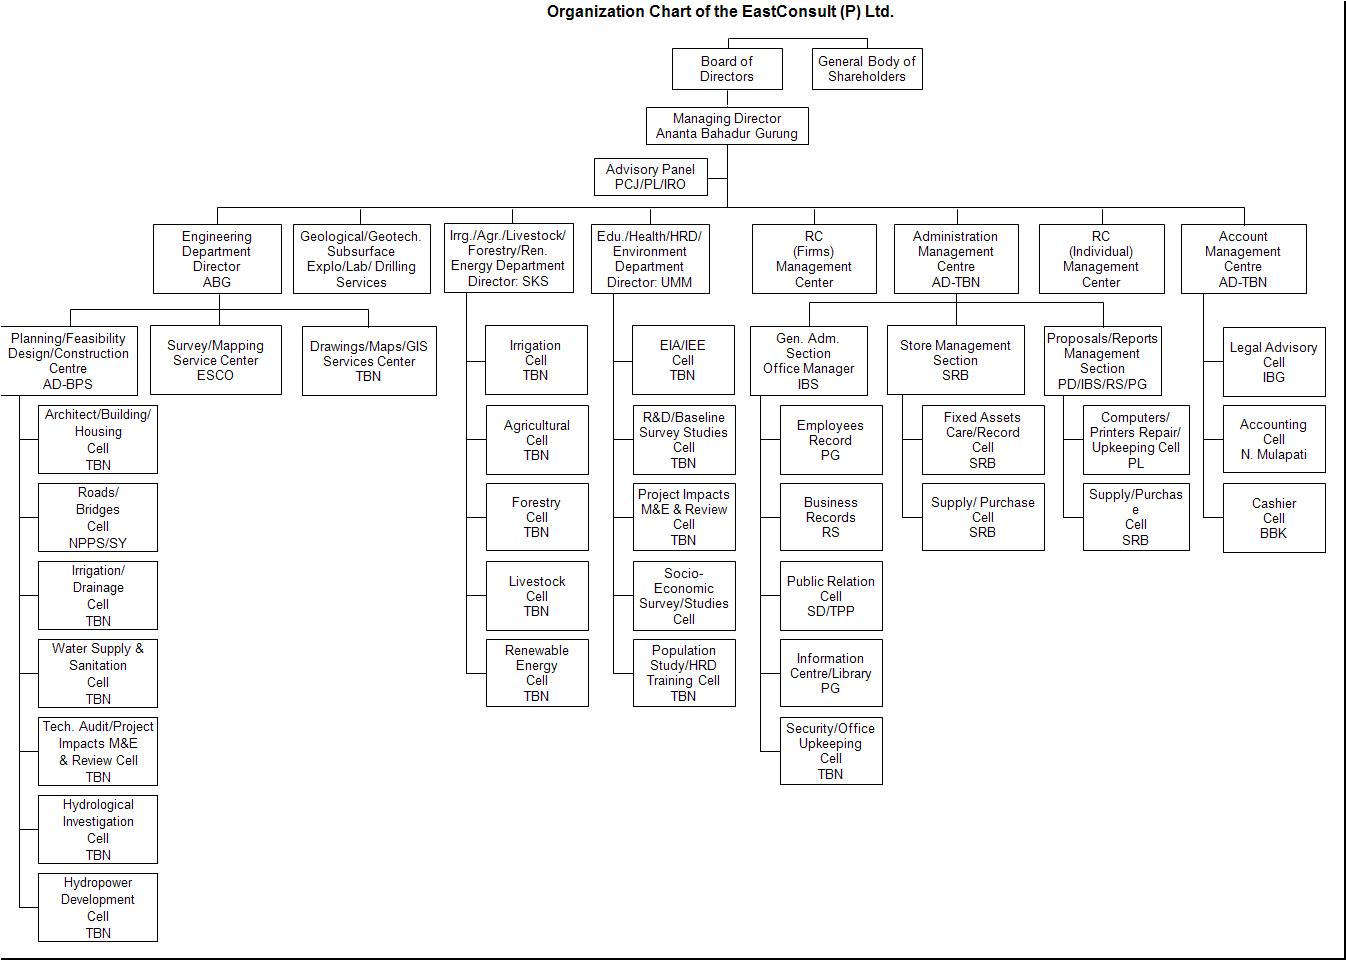 Organization Chart | East Consult Pvt Ltd